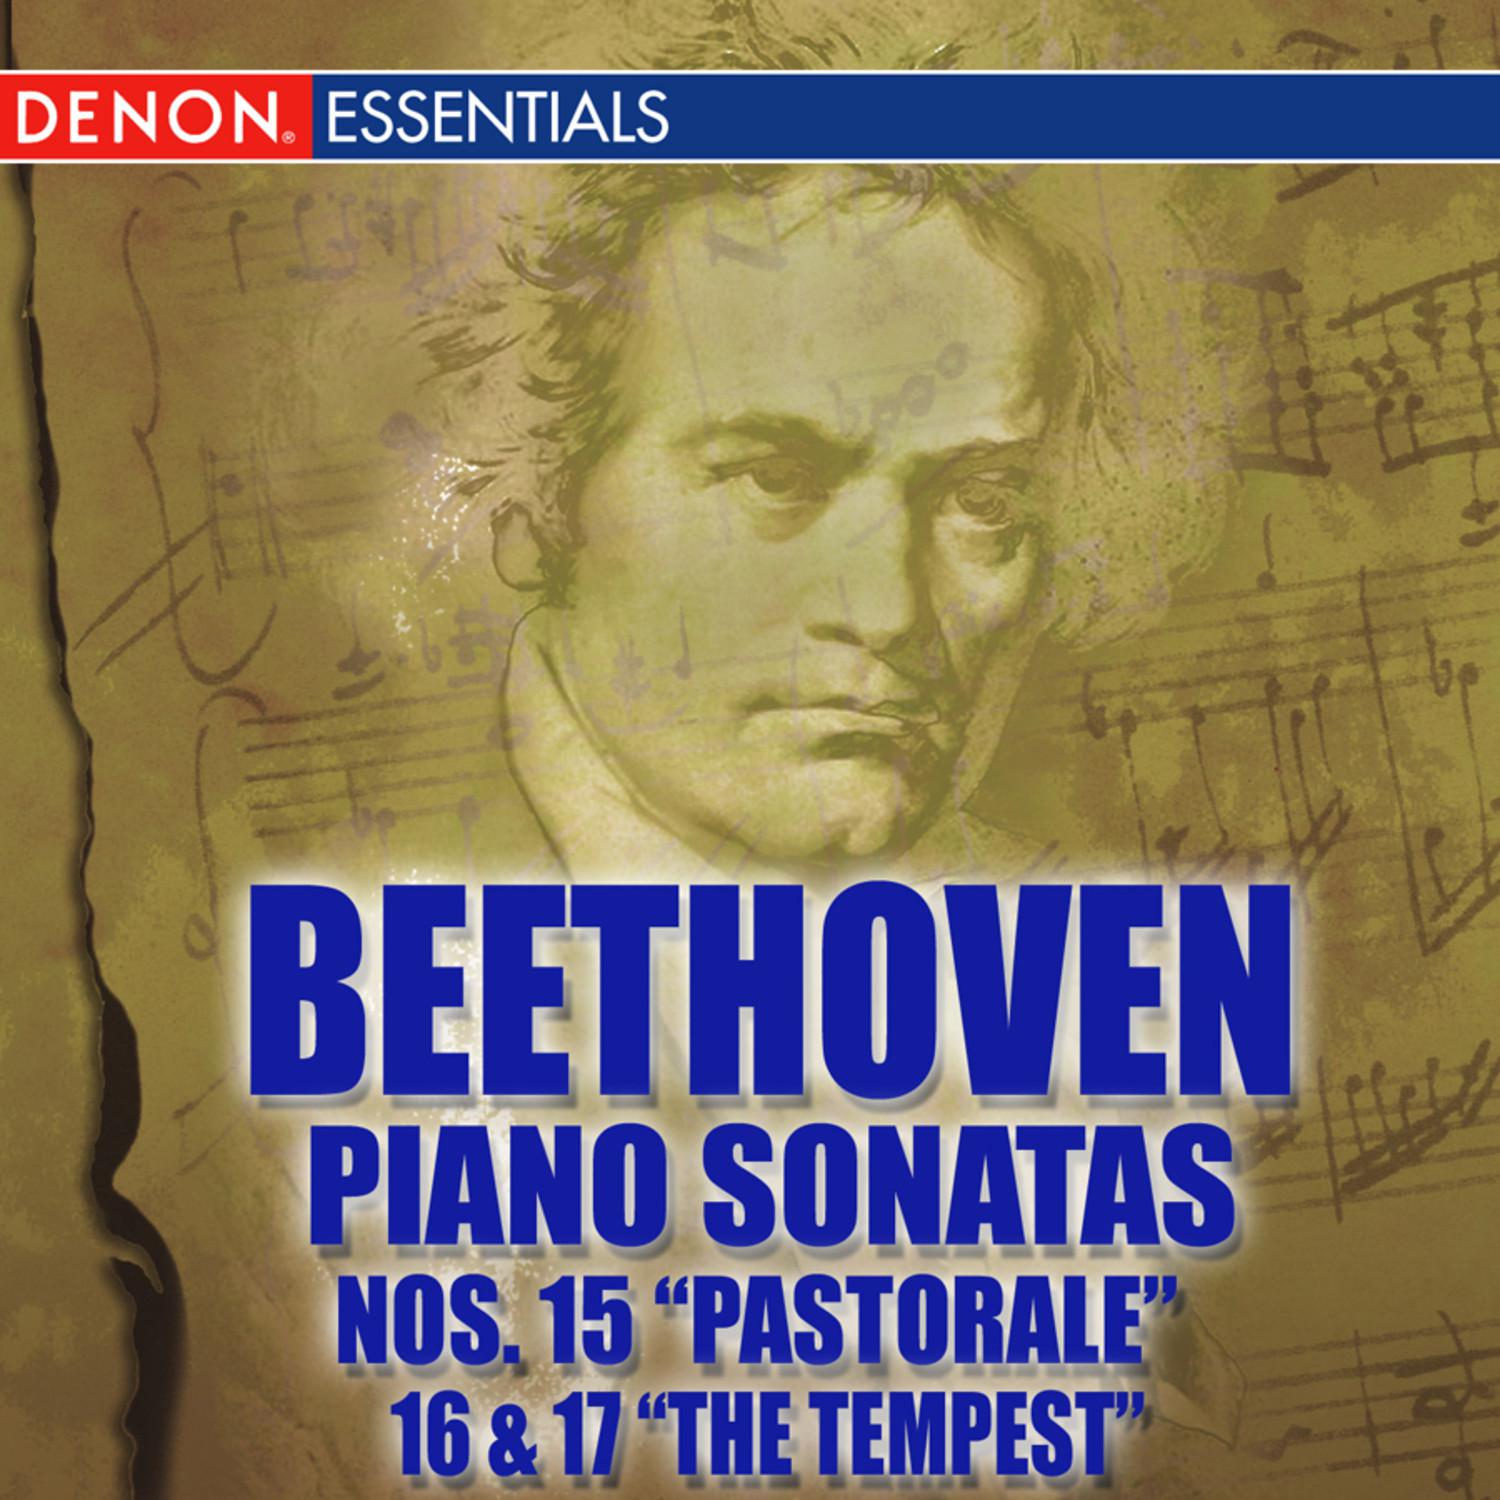 Beethoven Piano Sonatas Nos. 15 "Pastorale", 16 & 17 "Tempest"